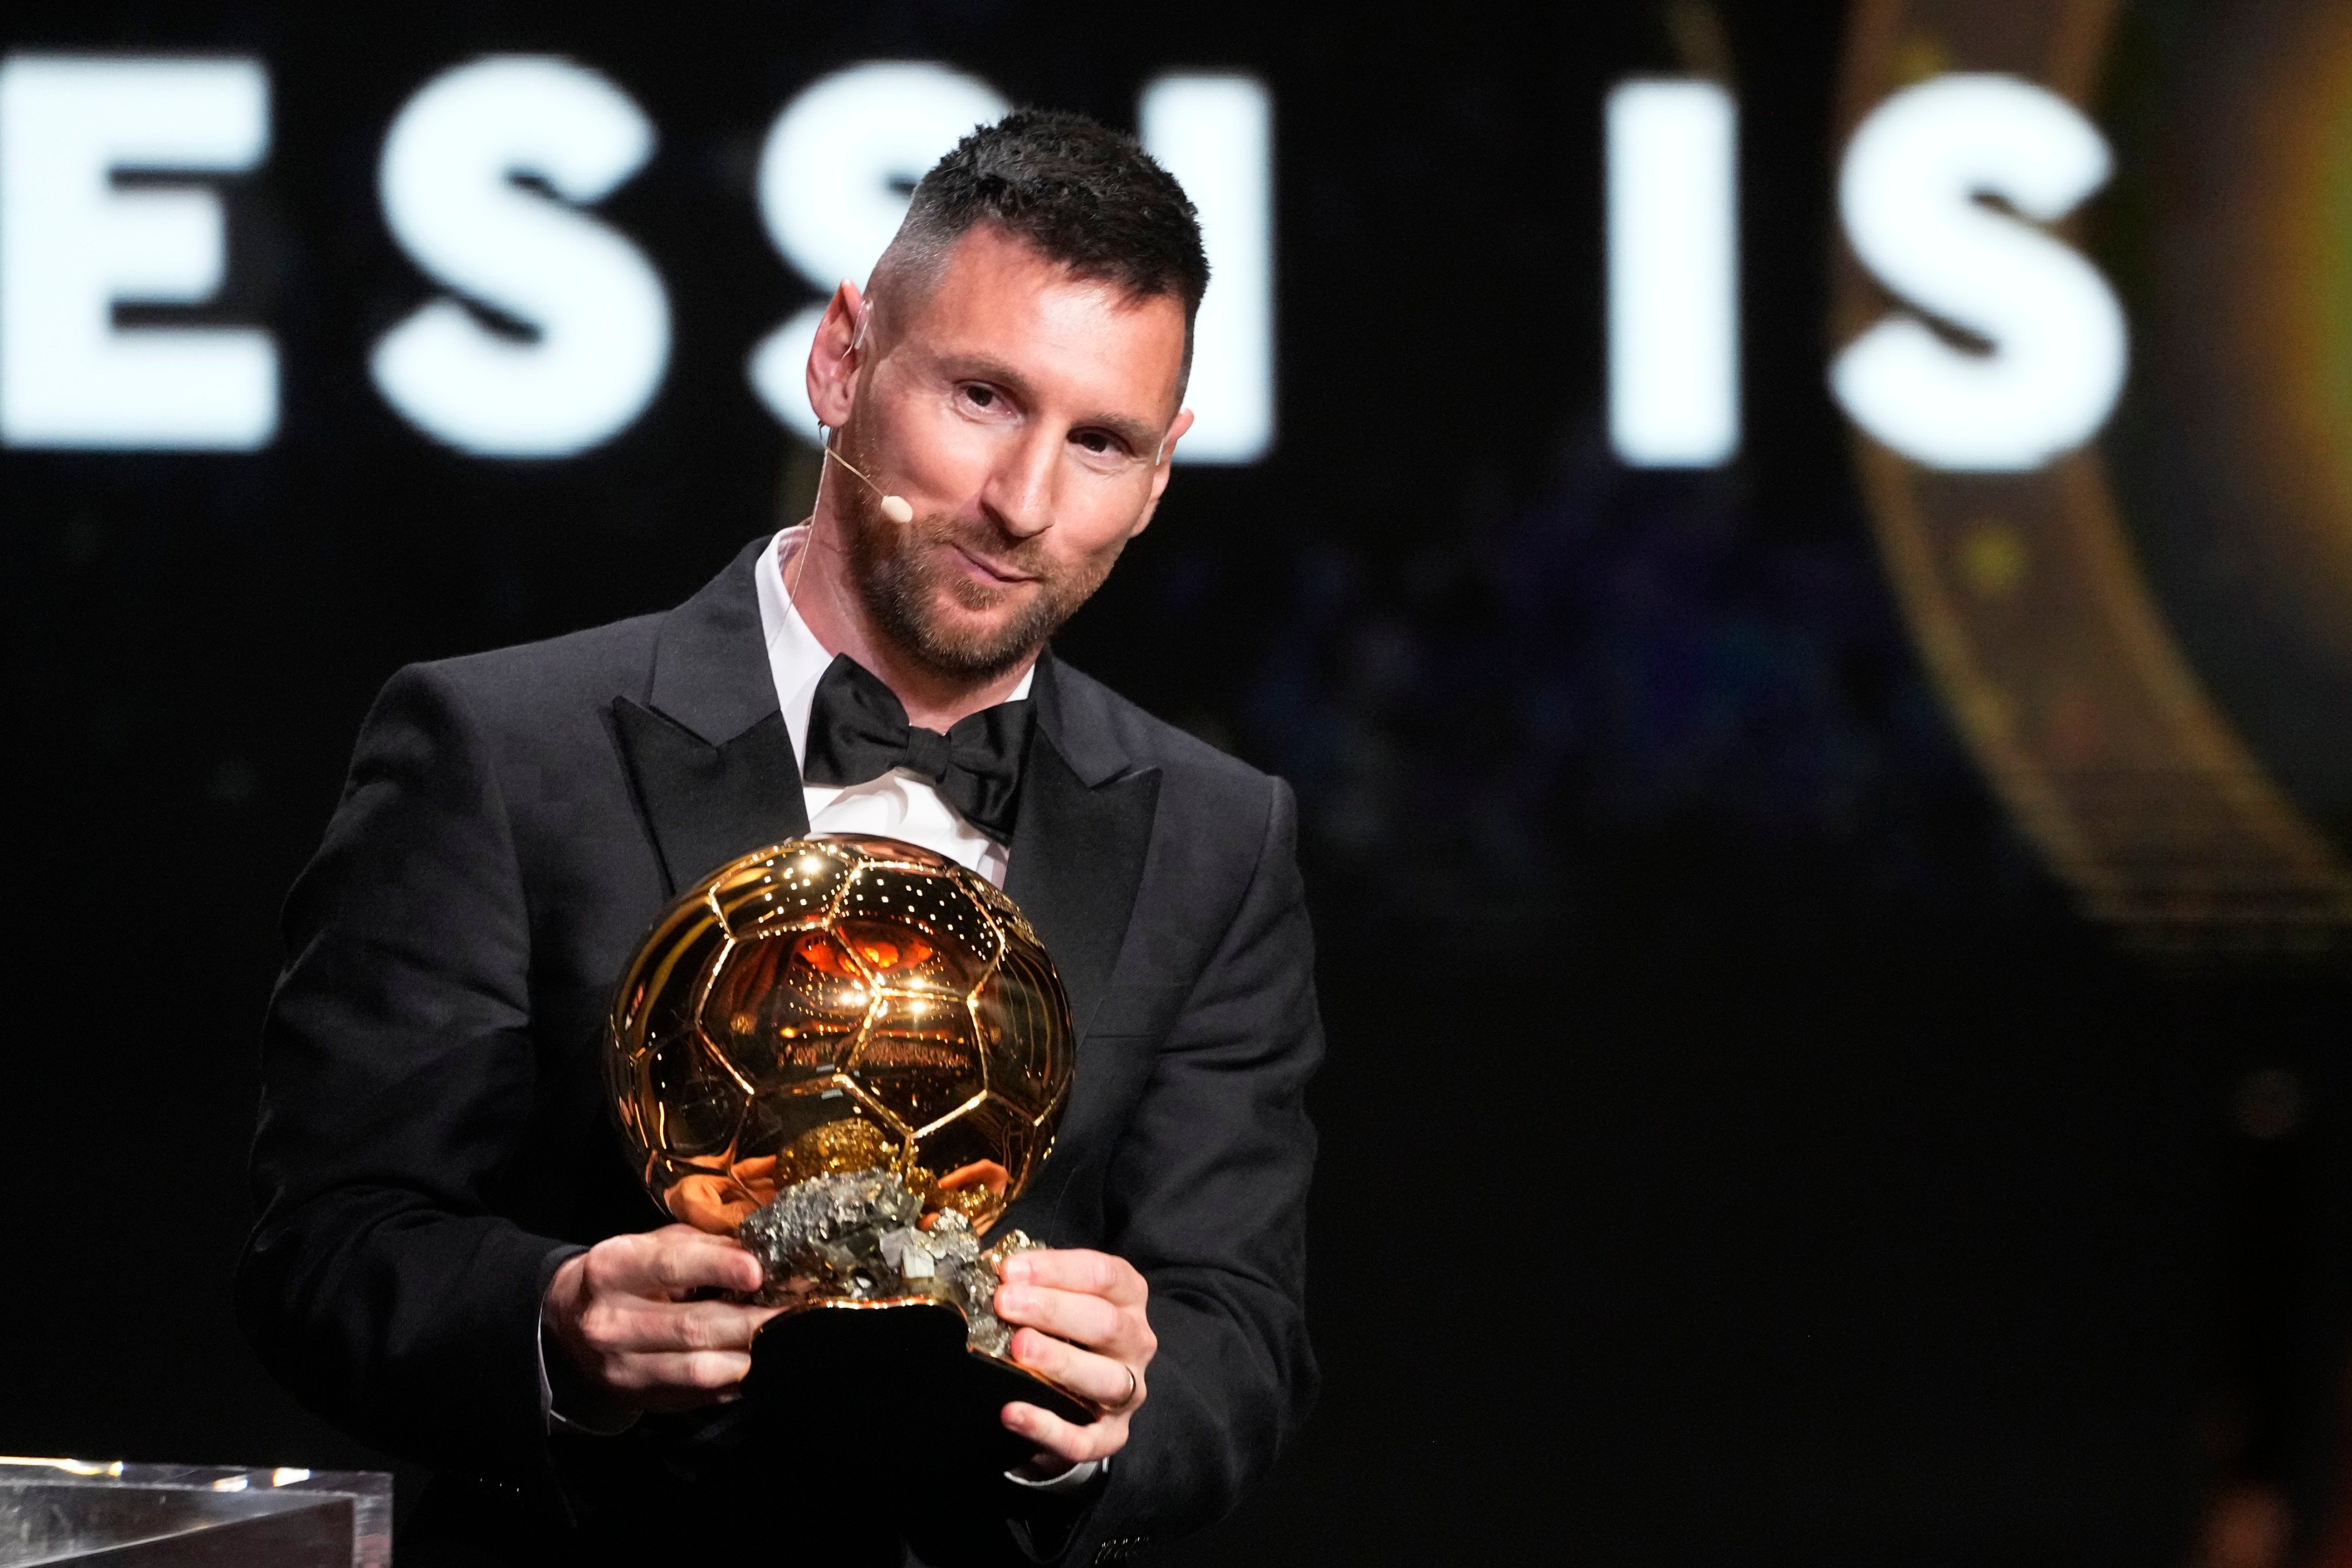 Lionel Messi, Silver Boot Award